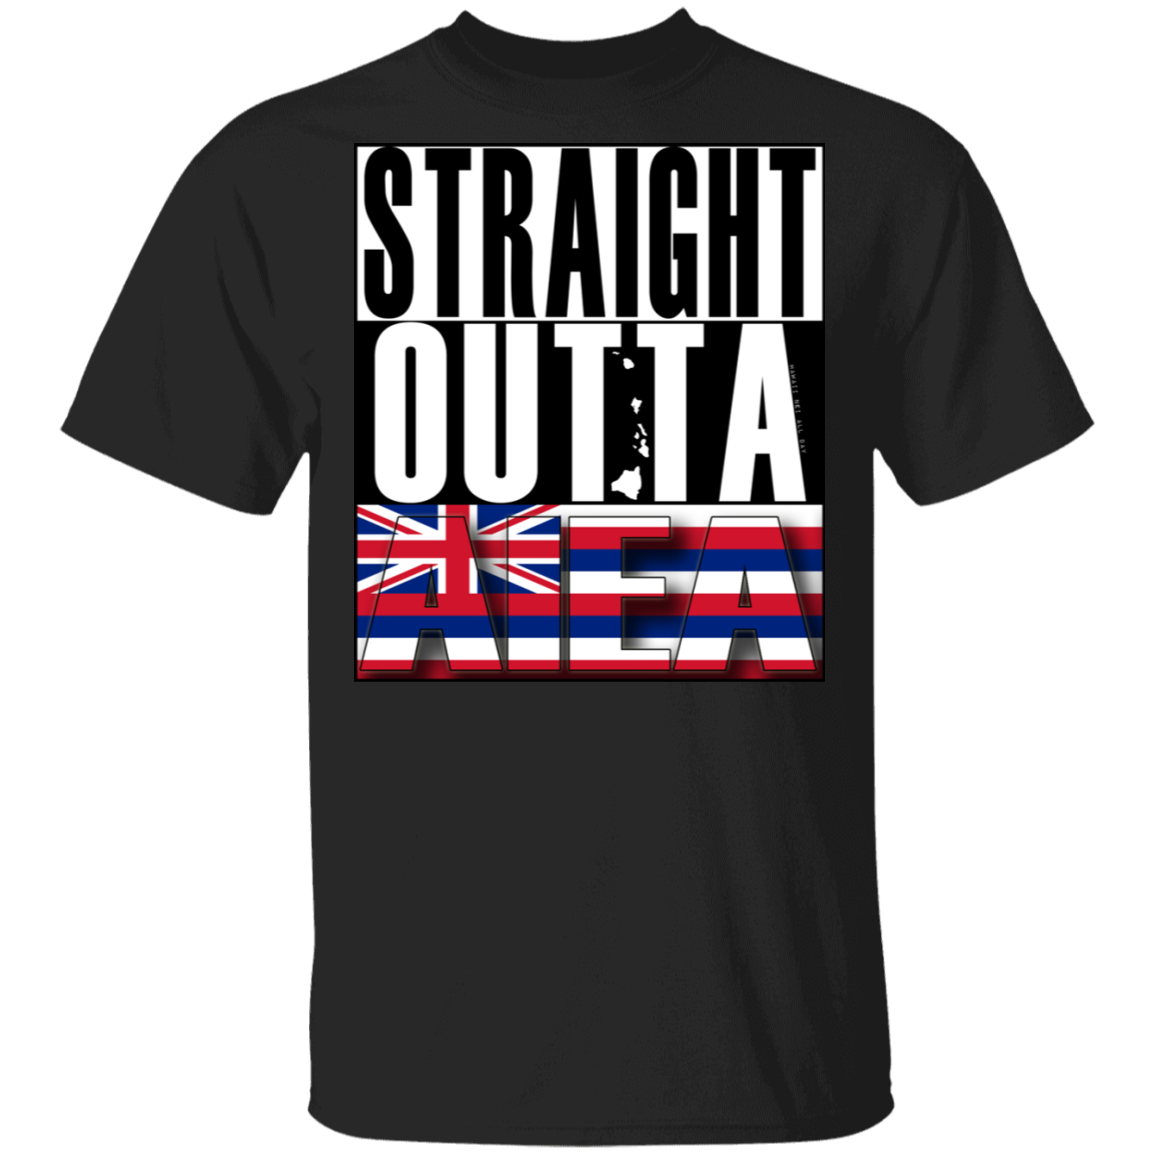 Straight Outta Aiea T-Shirt, T-Shirts, Hawaii Nei All Day